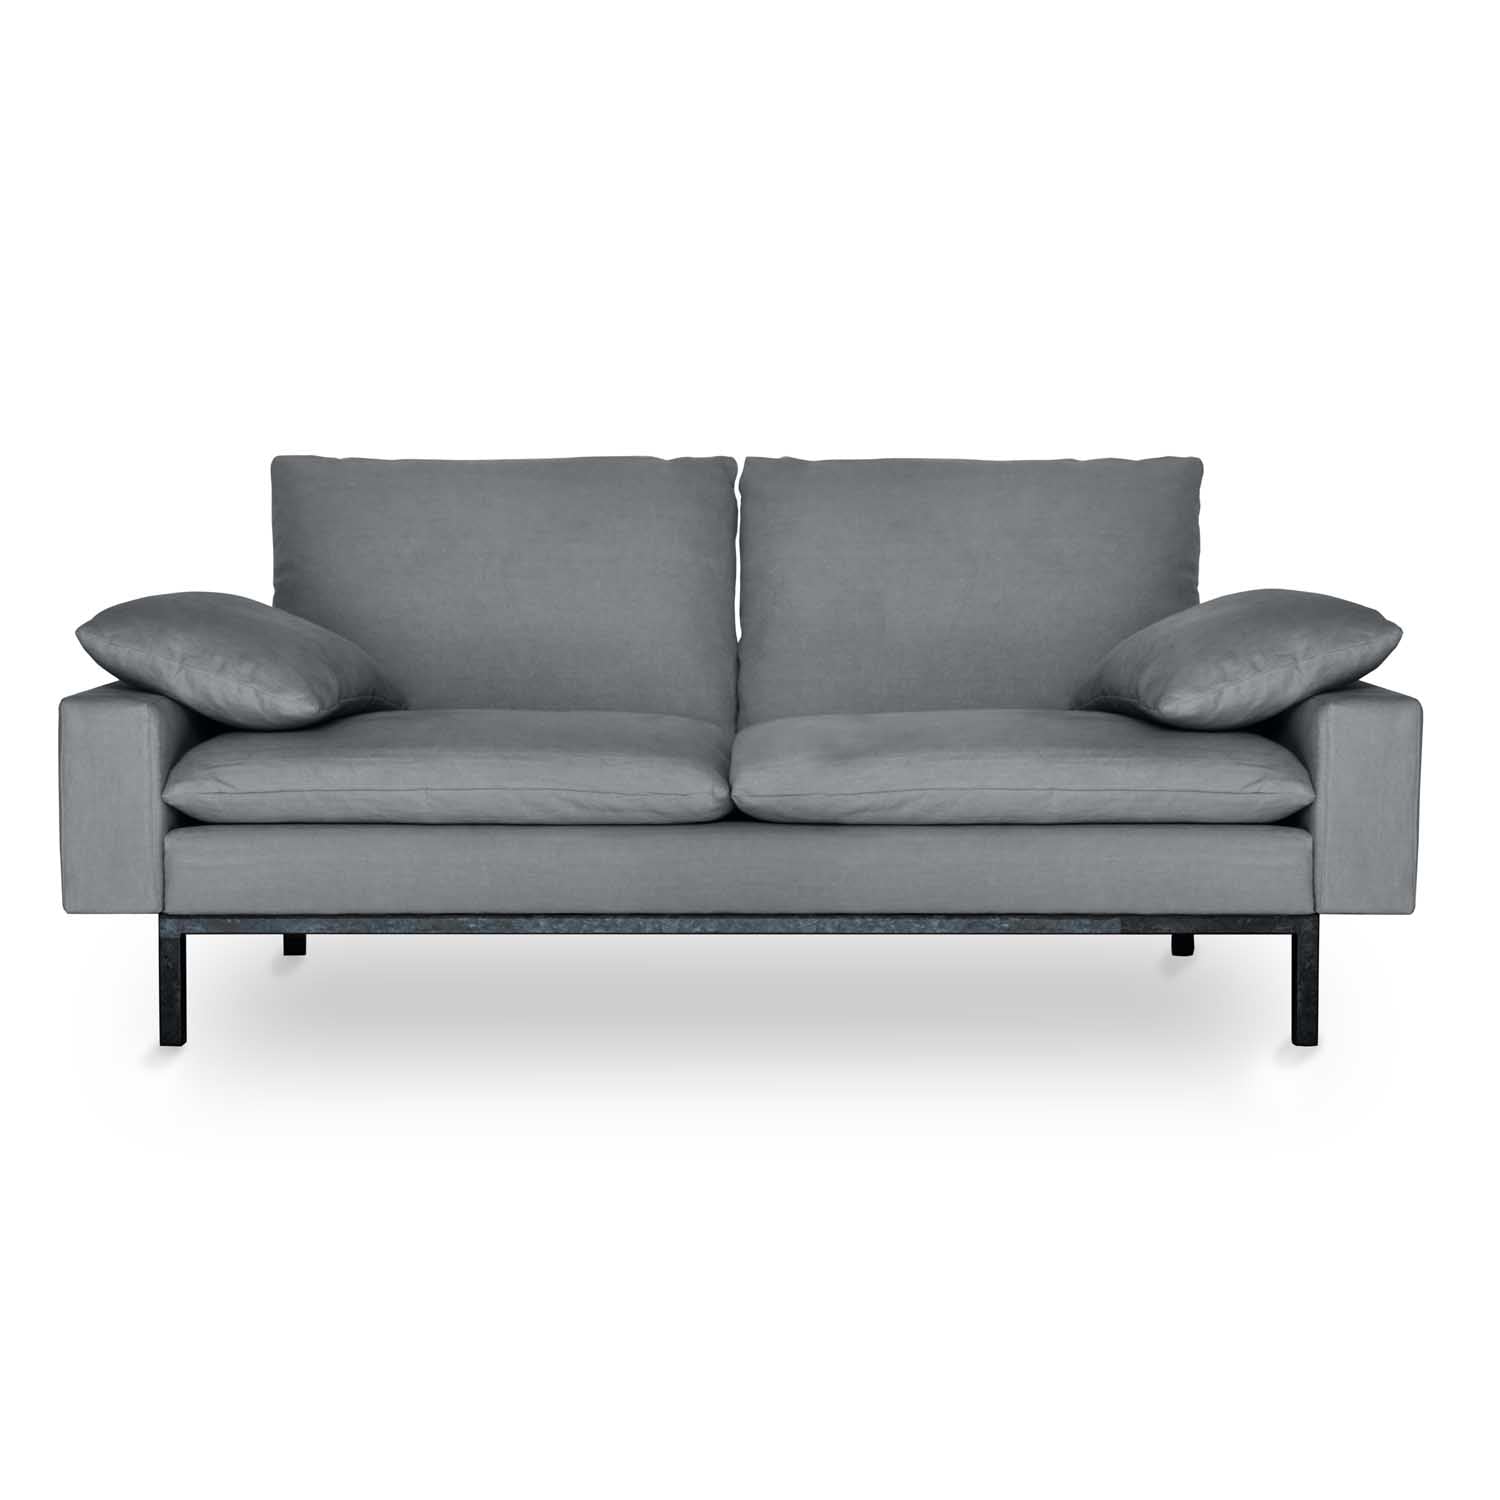 Versatile Armrests for Relaxation, grey linen sofa